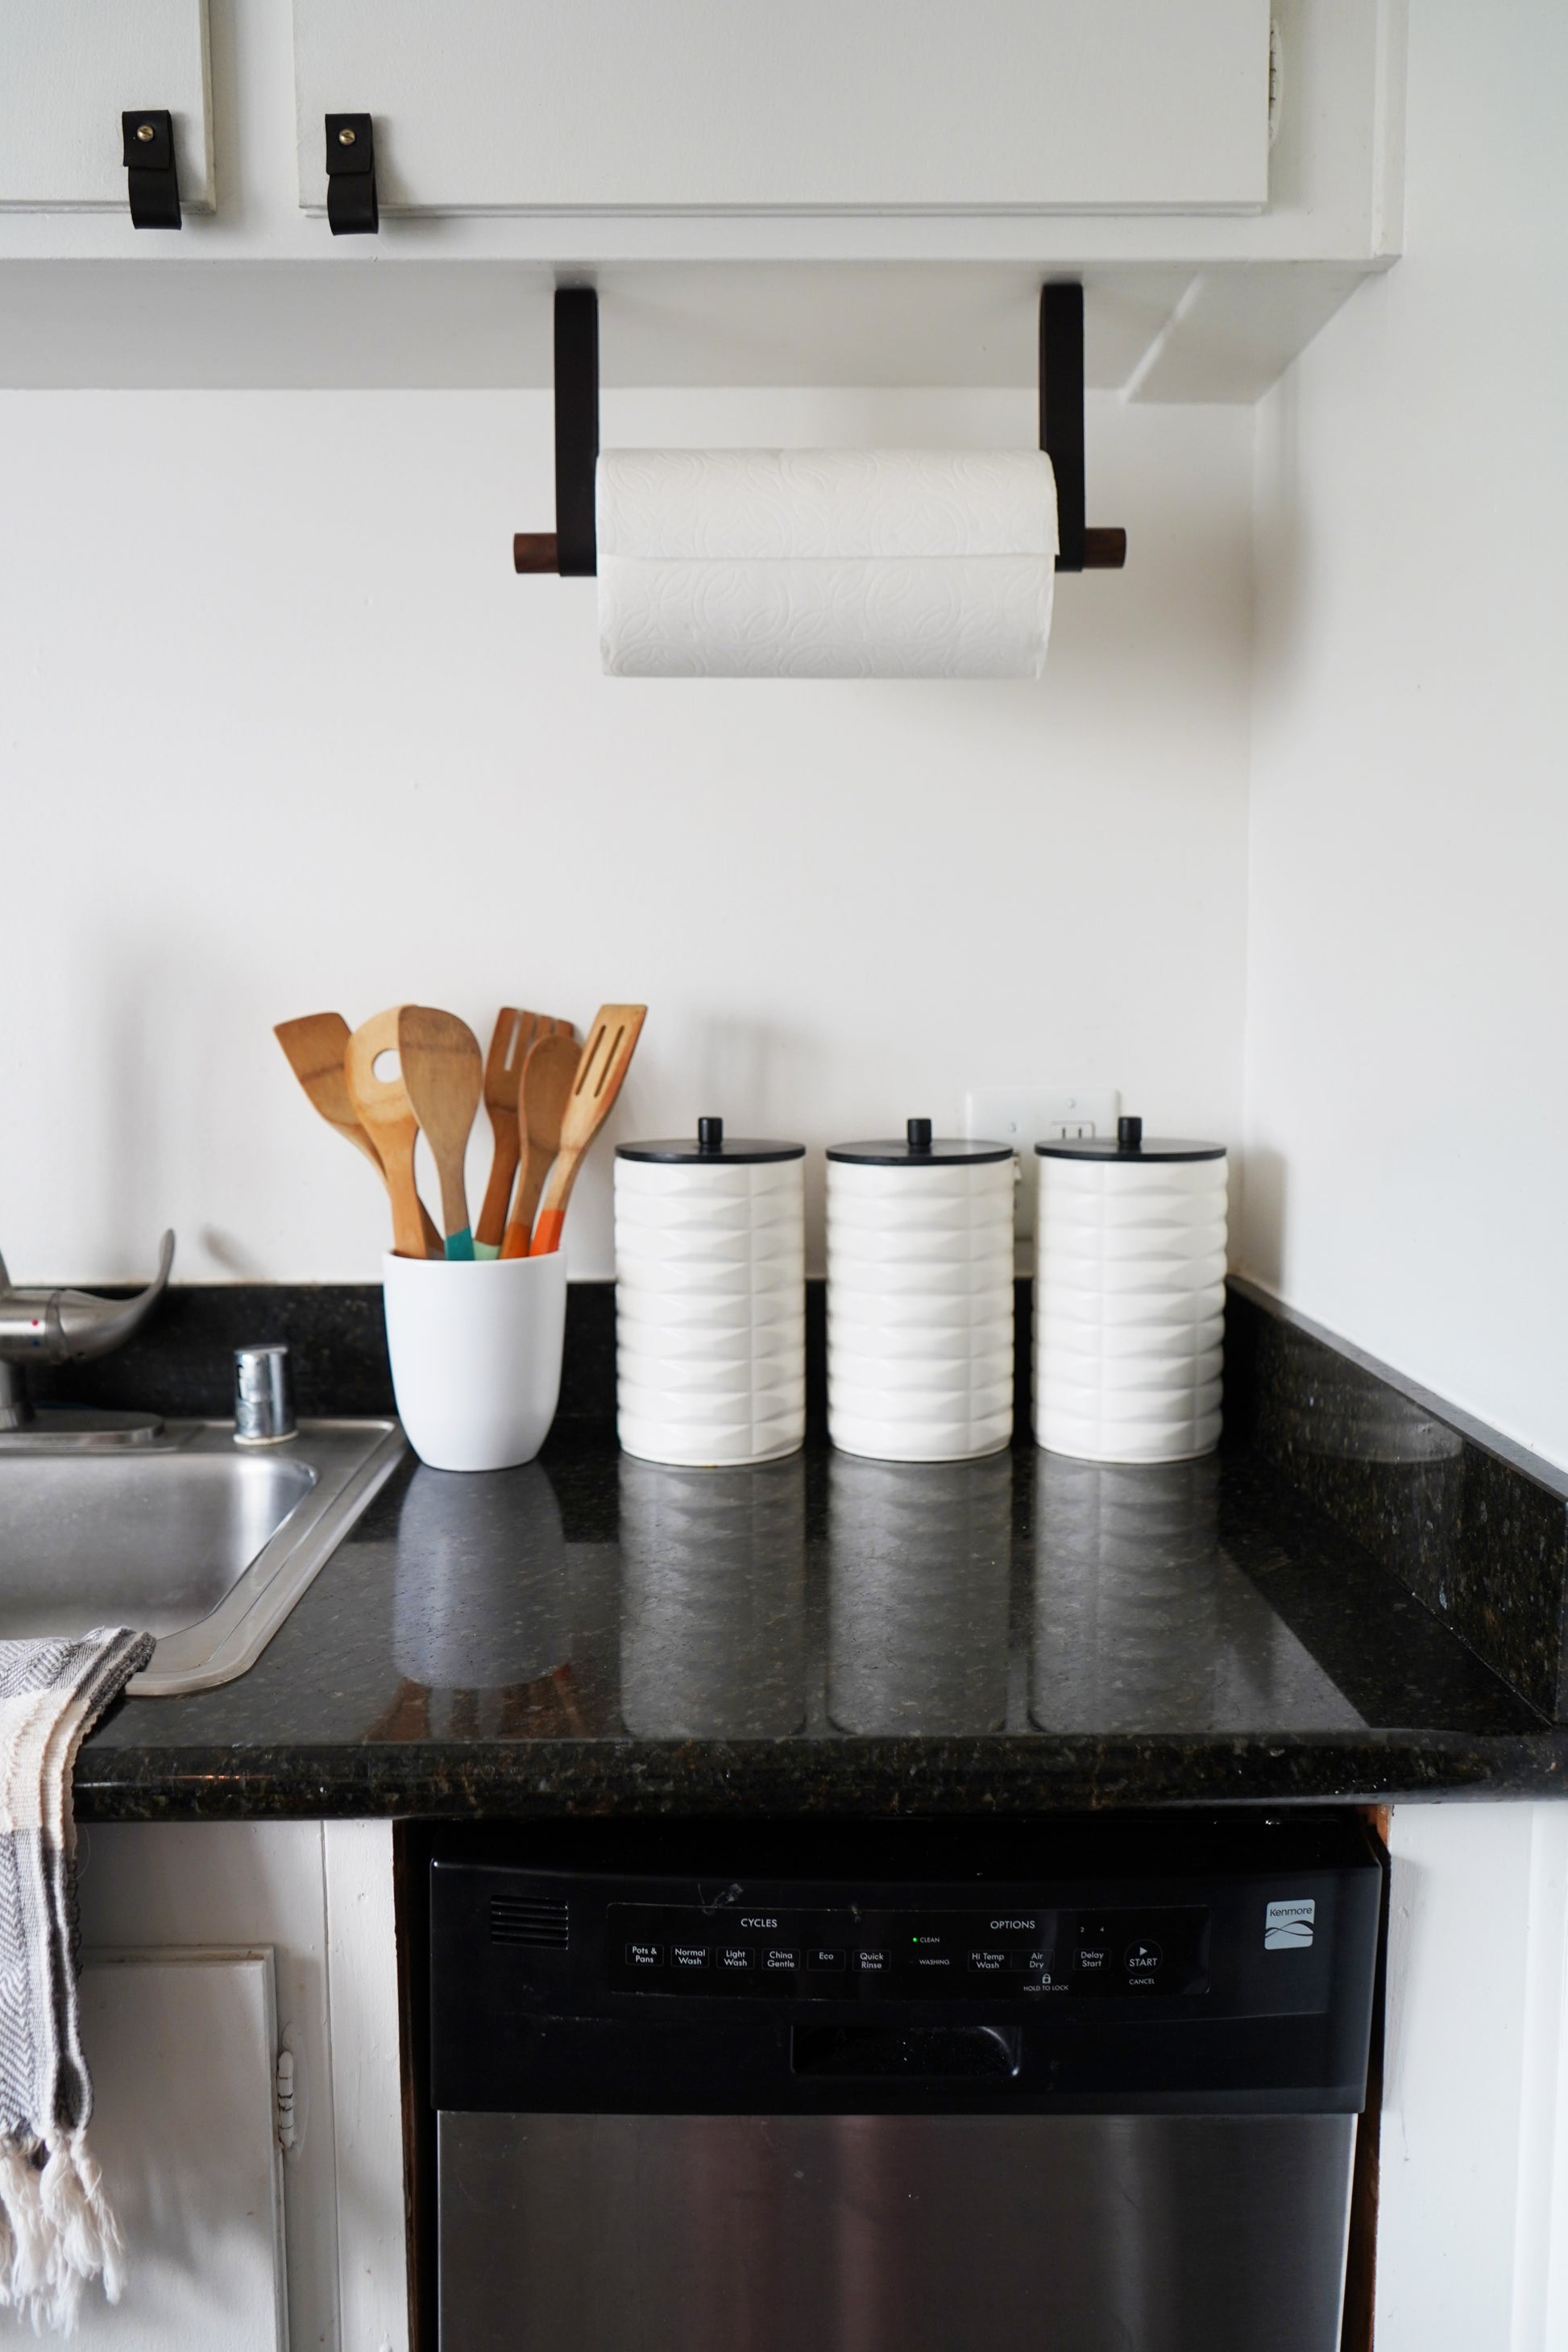 Paper Towel Holder Countertop Vertical Paper Towel Holder For Kitchen  Farmhouse Living Room